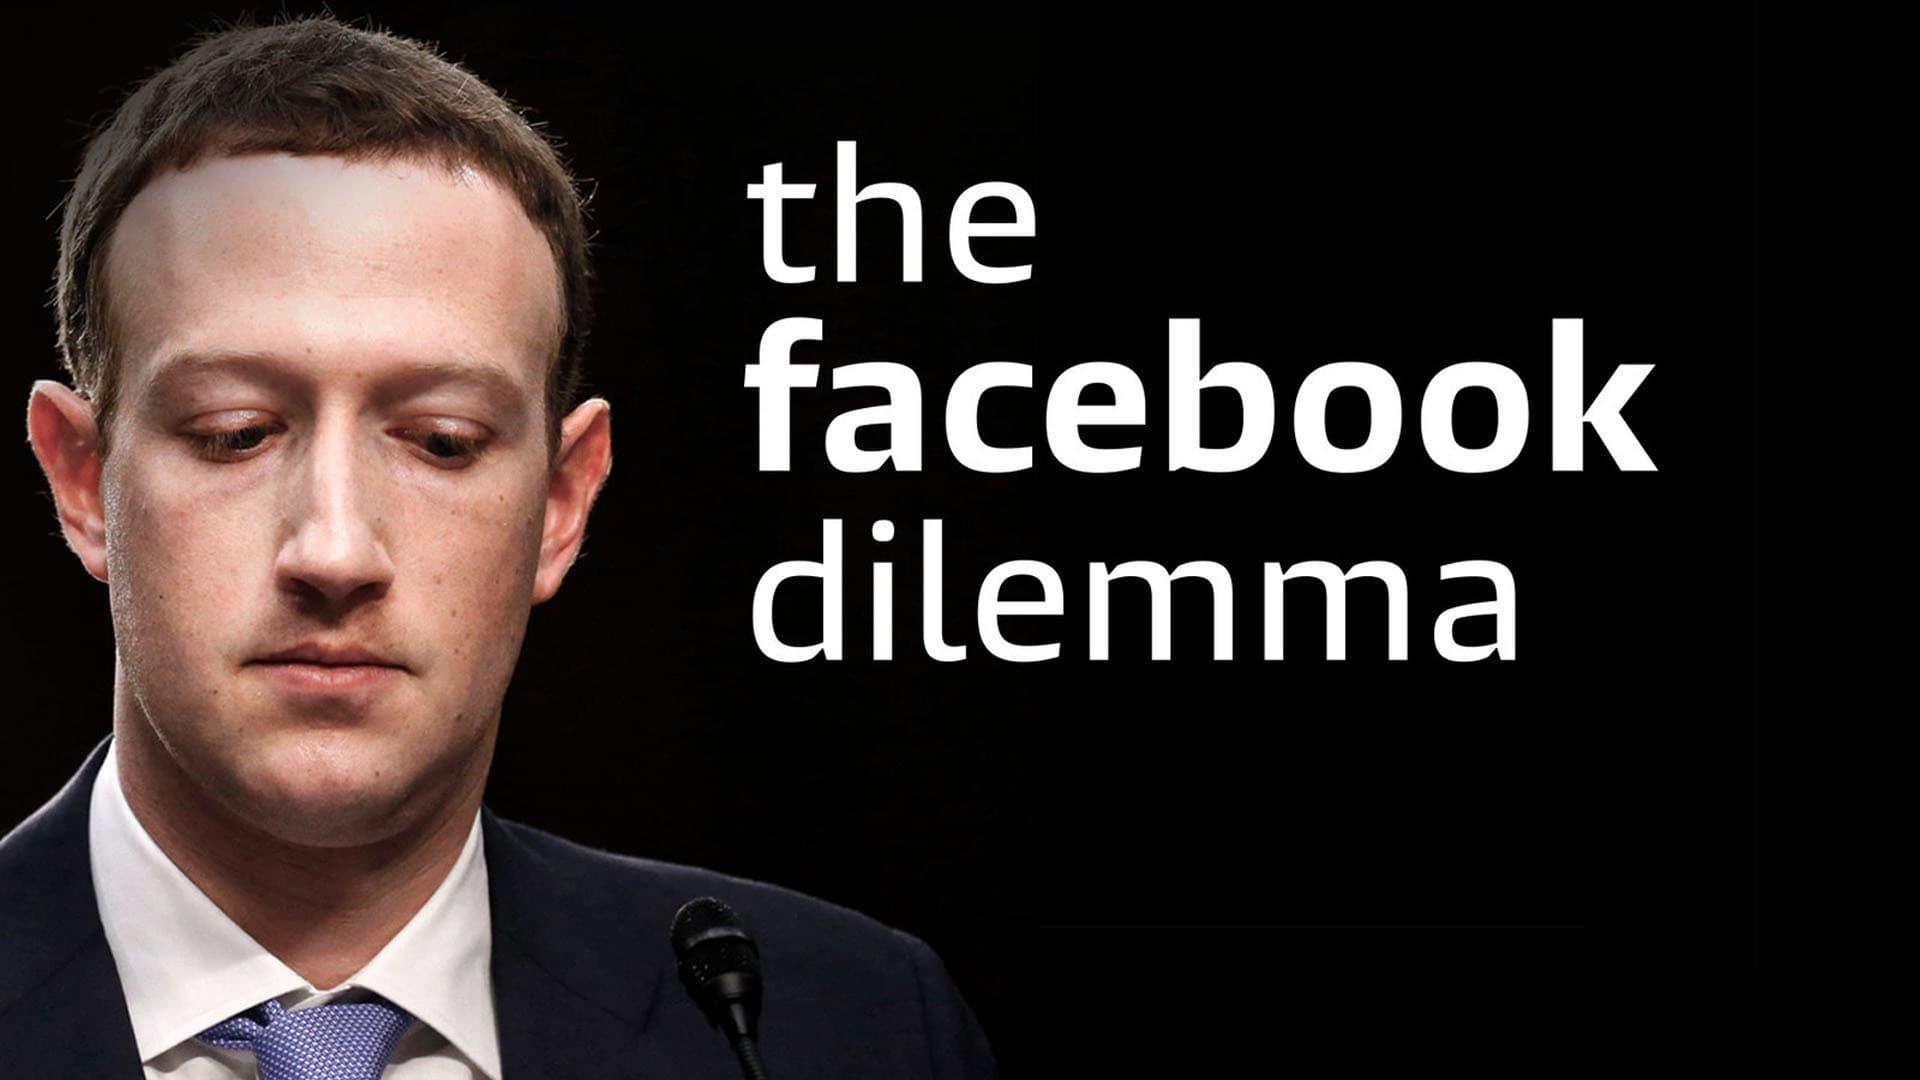 The Facebook Dilemma backdrop